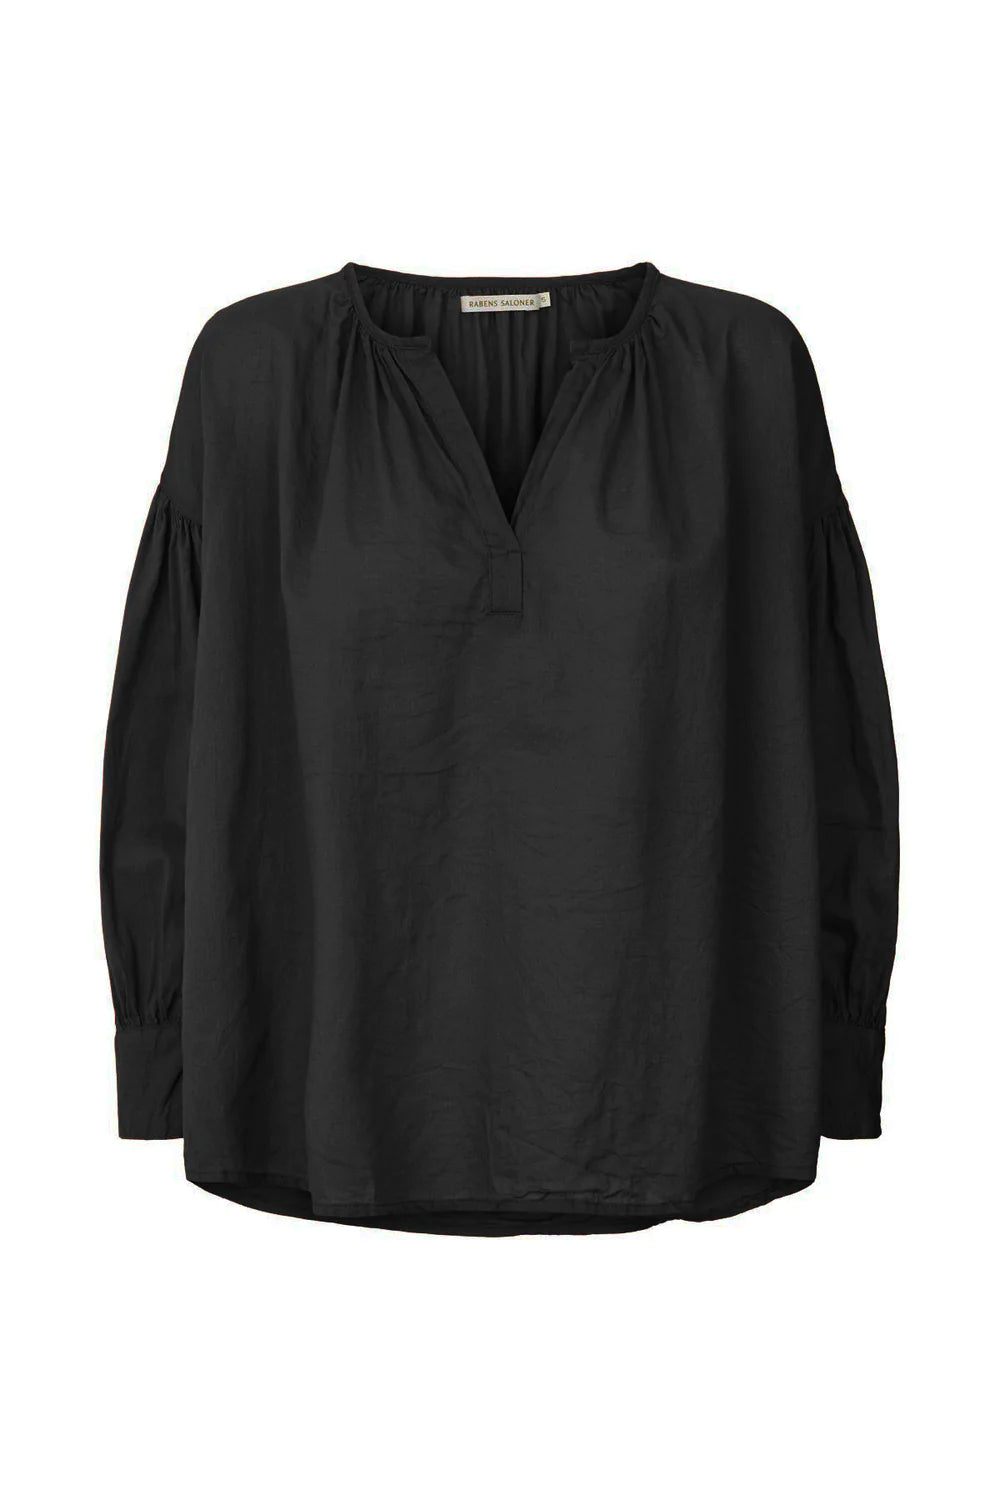 Rabens Saloner F20306110 Charlot Cotton Gathered Sleeve Blouse Black